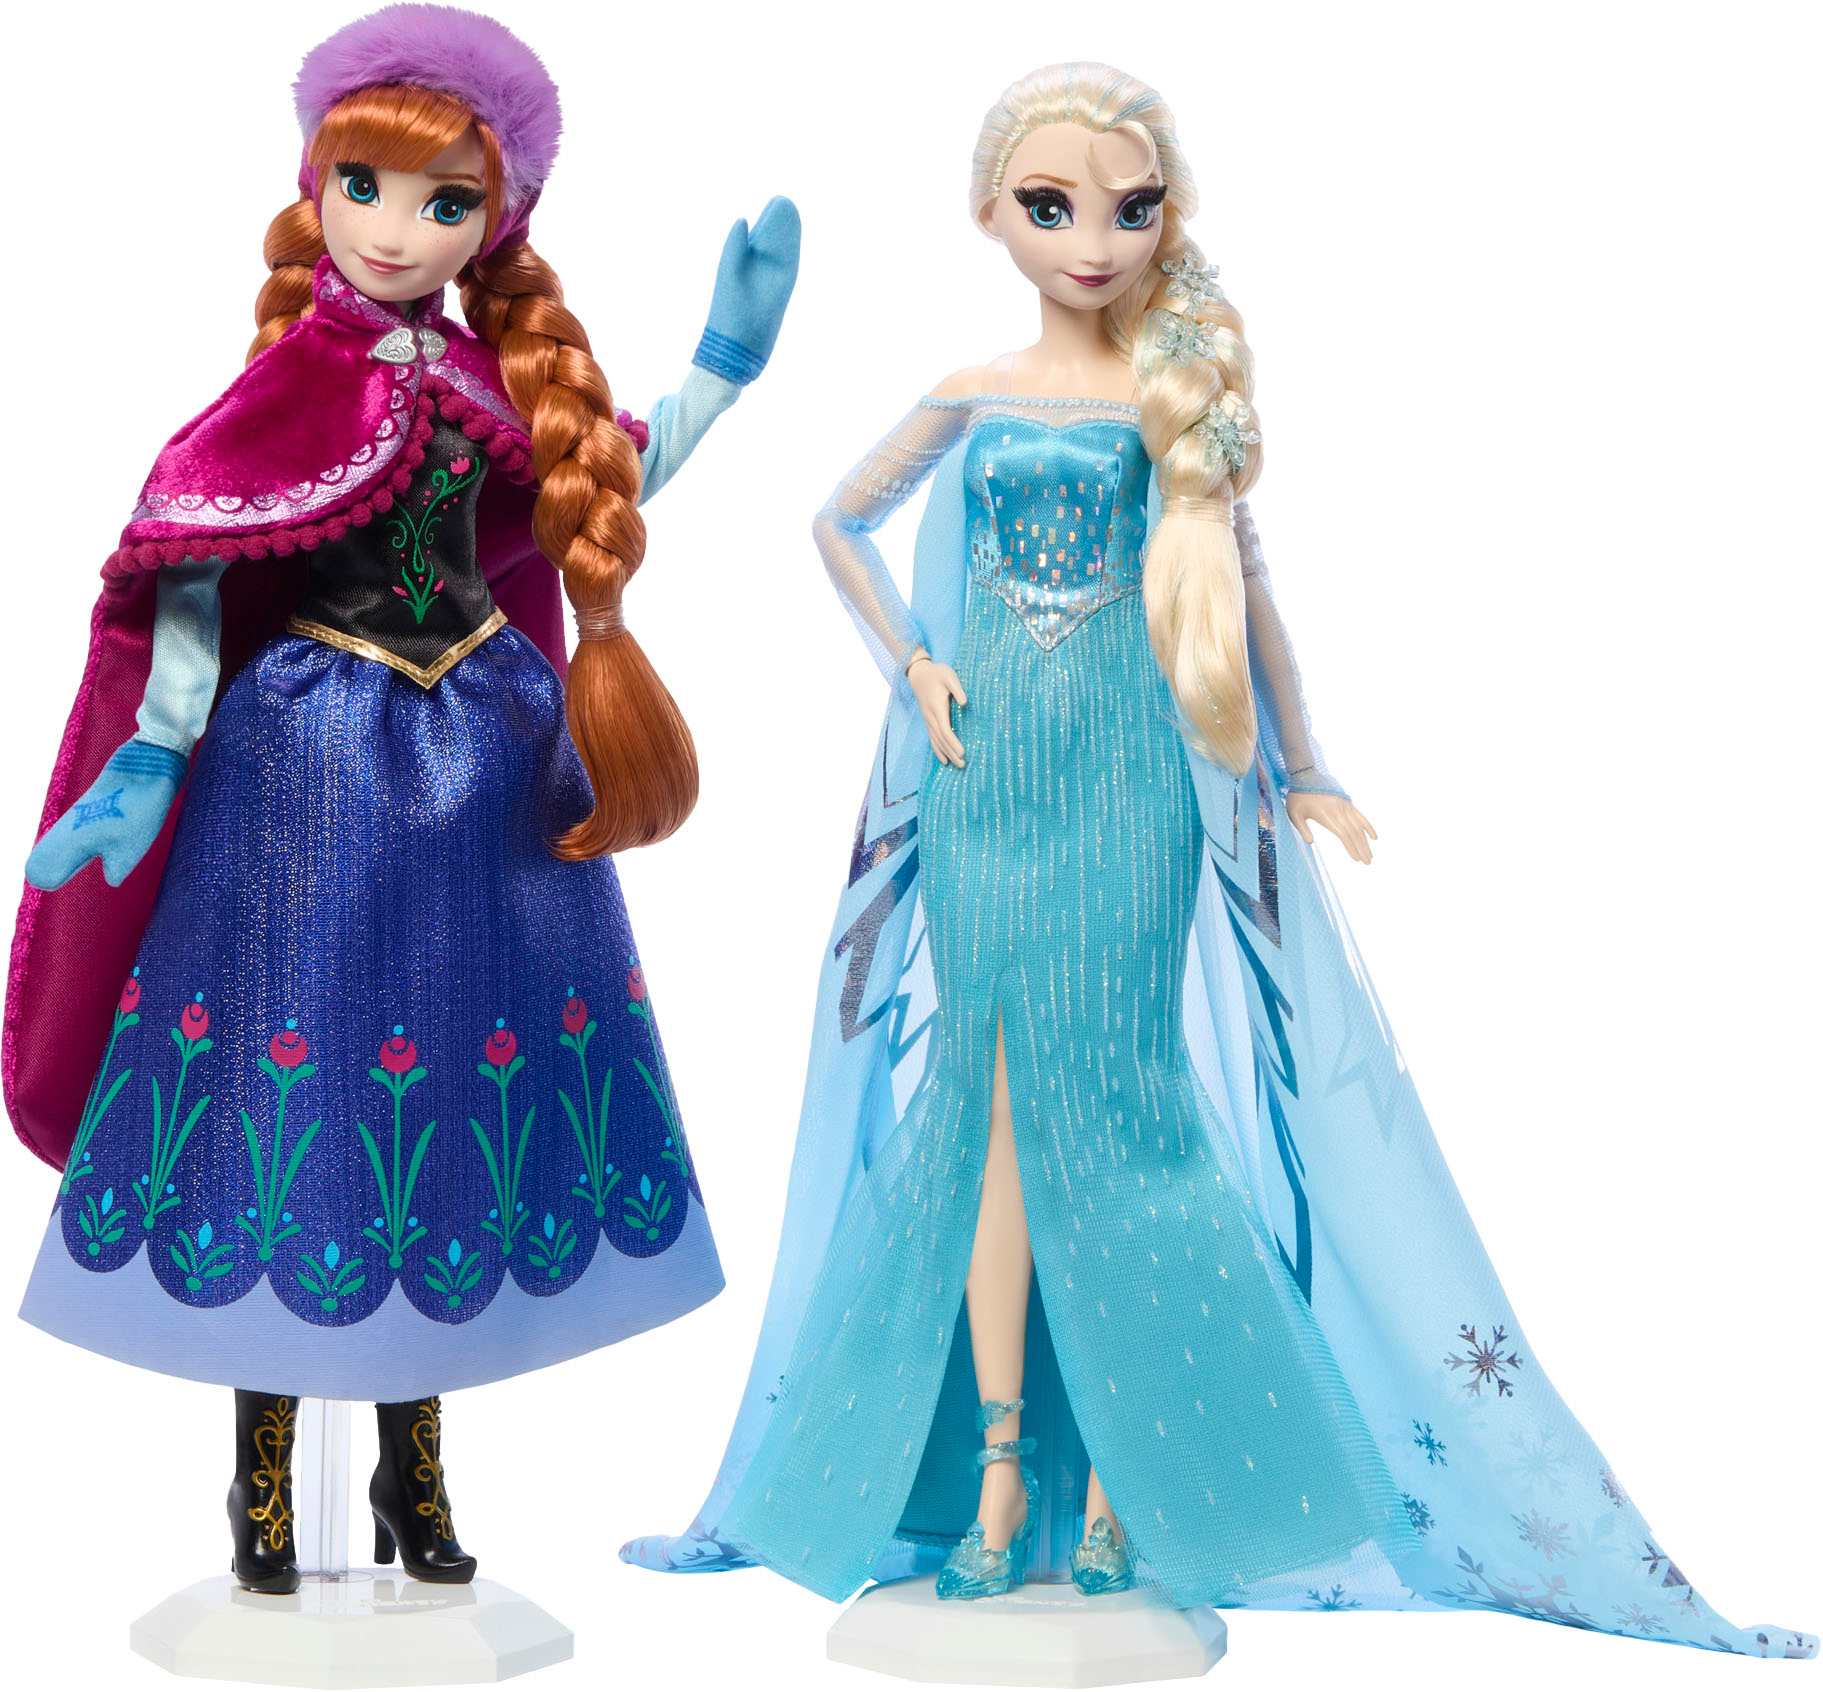 Elsa and Anna's Magical Moments